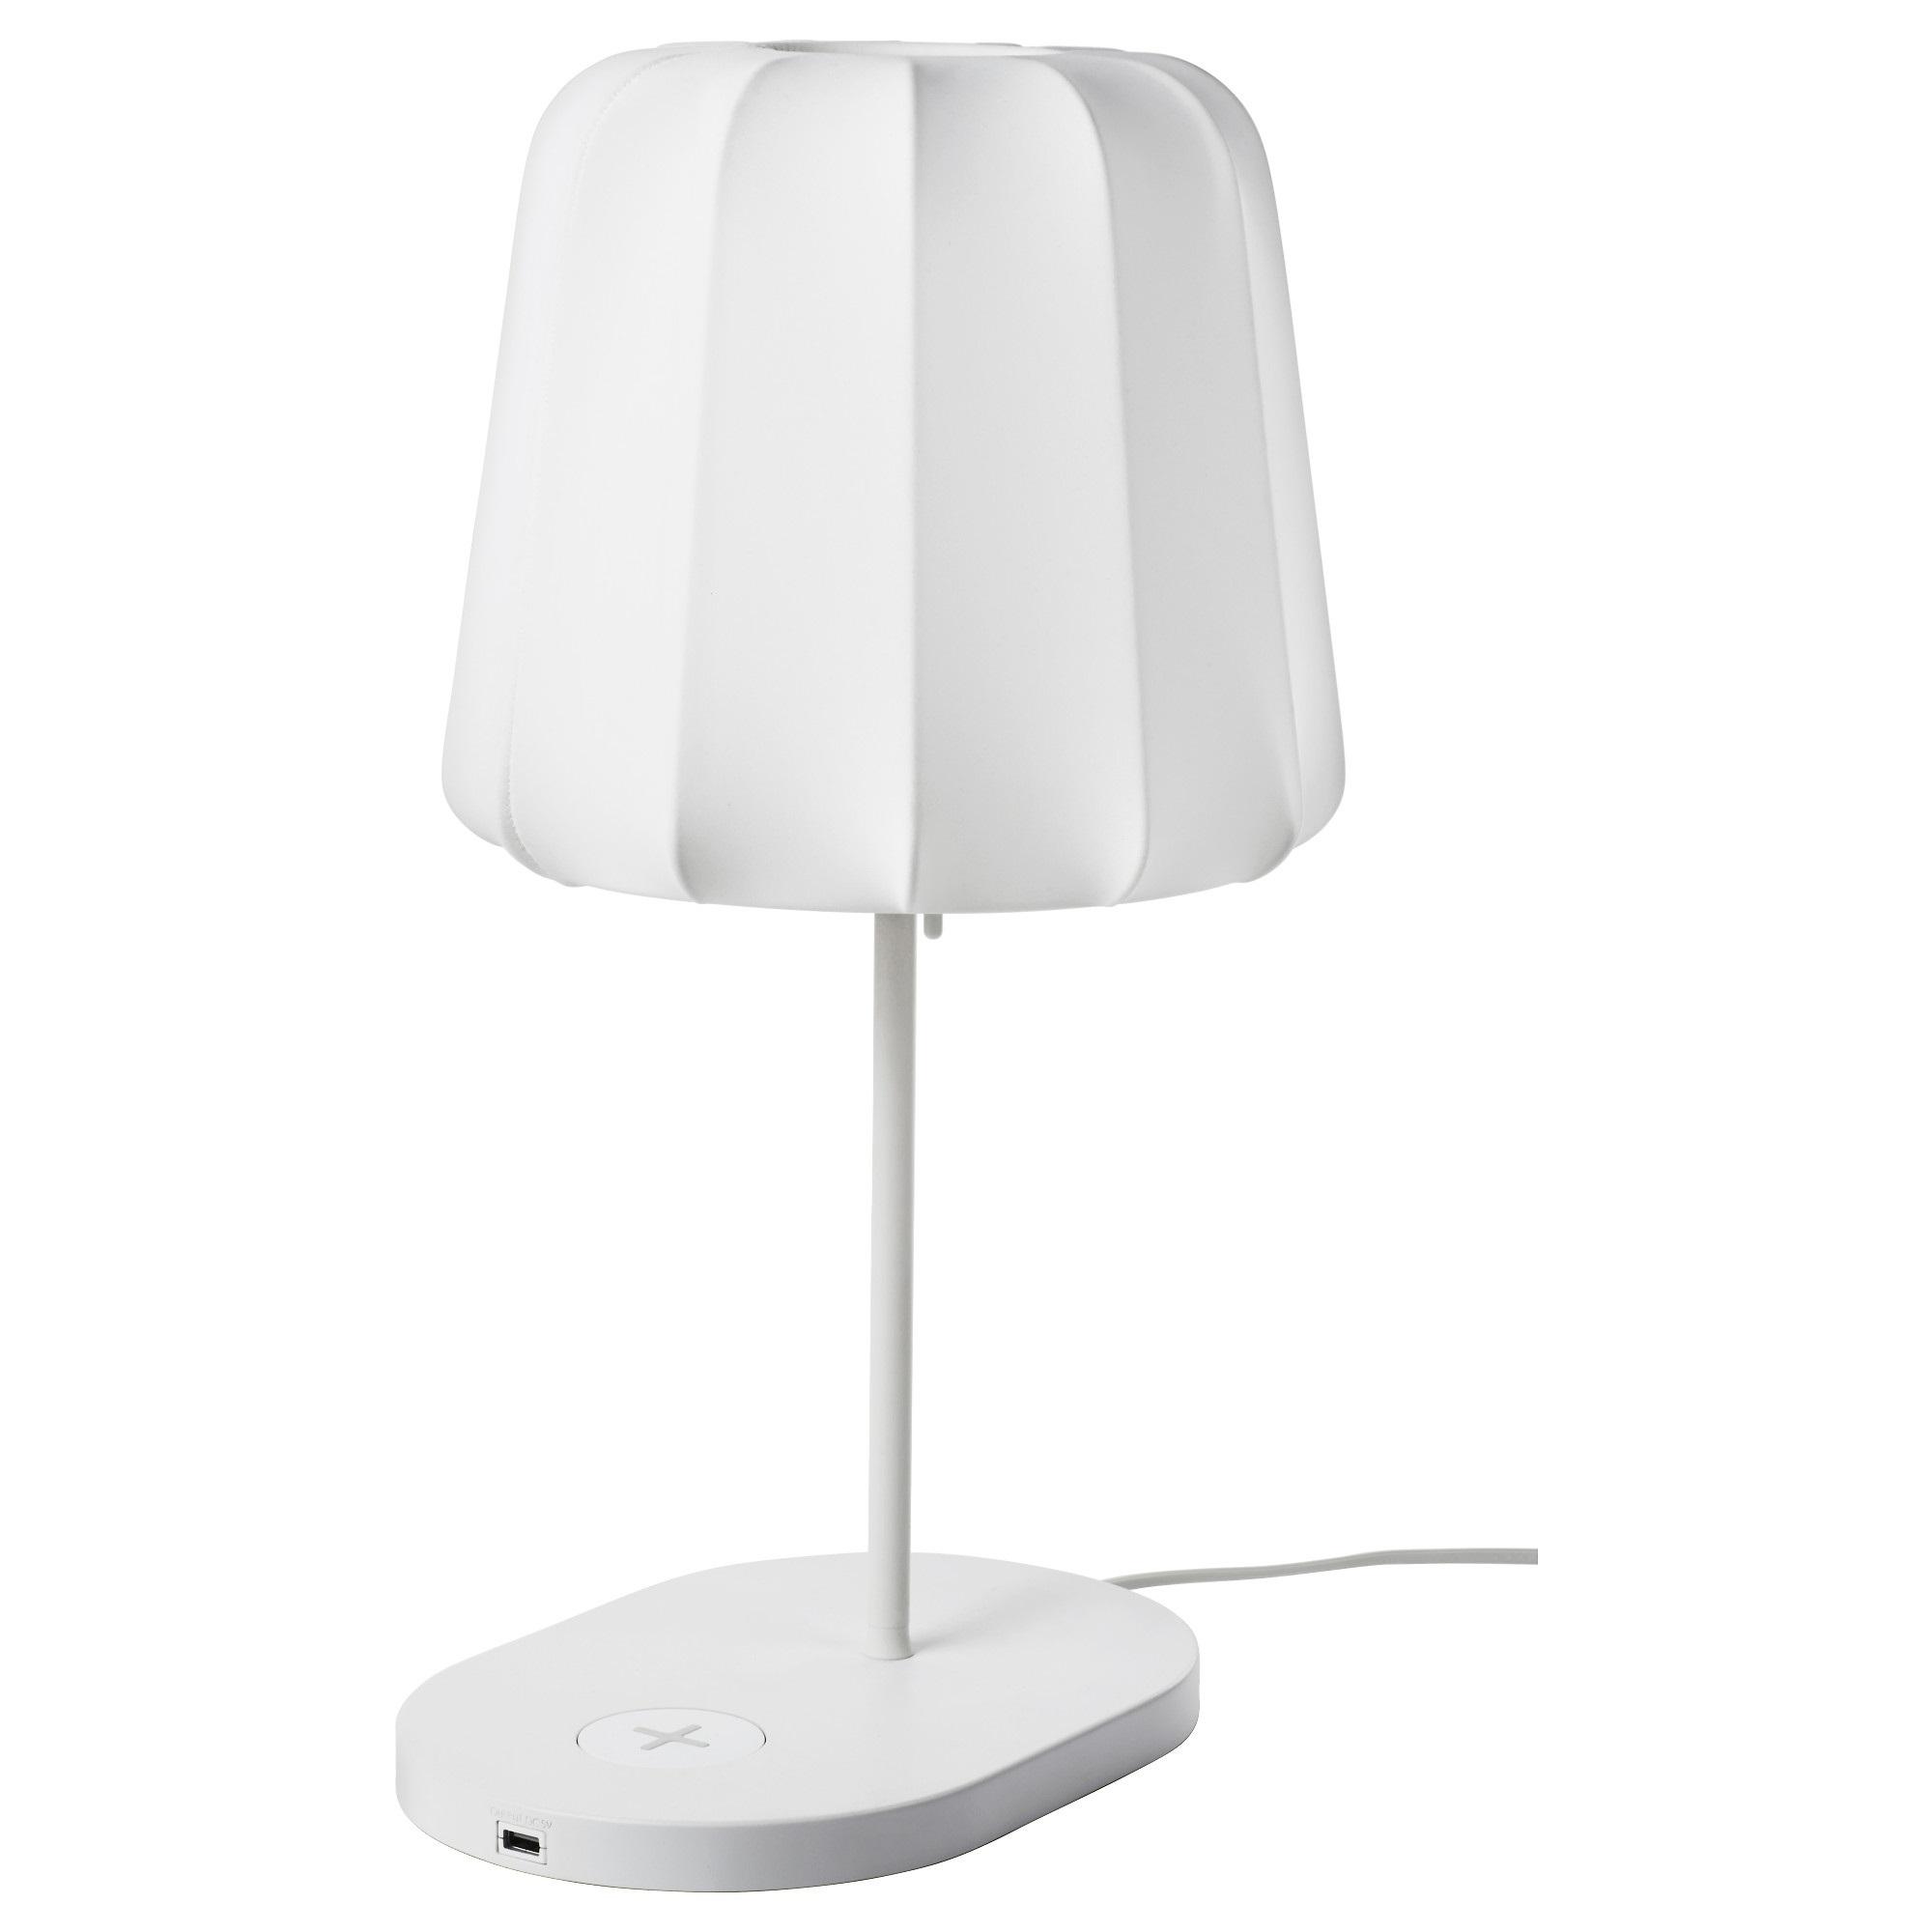 IKEA-lampen VARV. Foto: IKEA